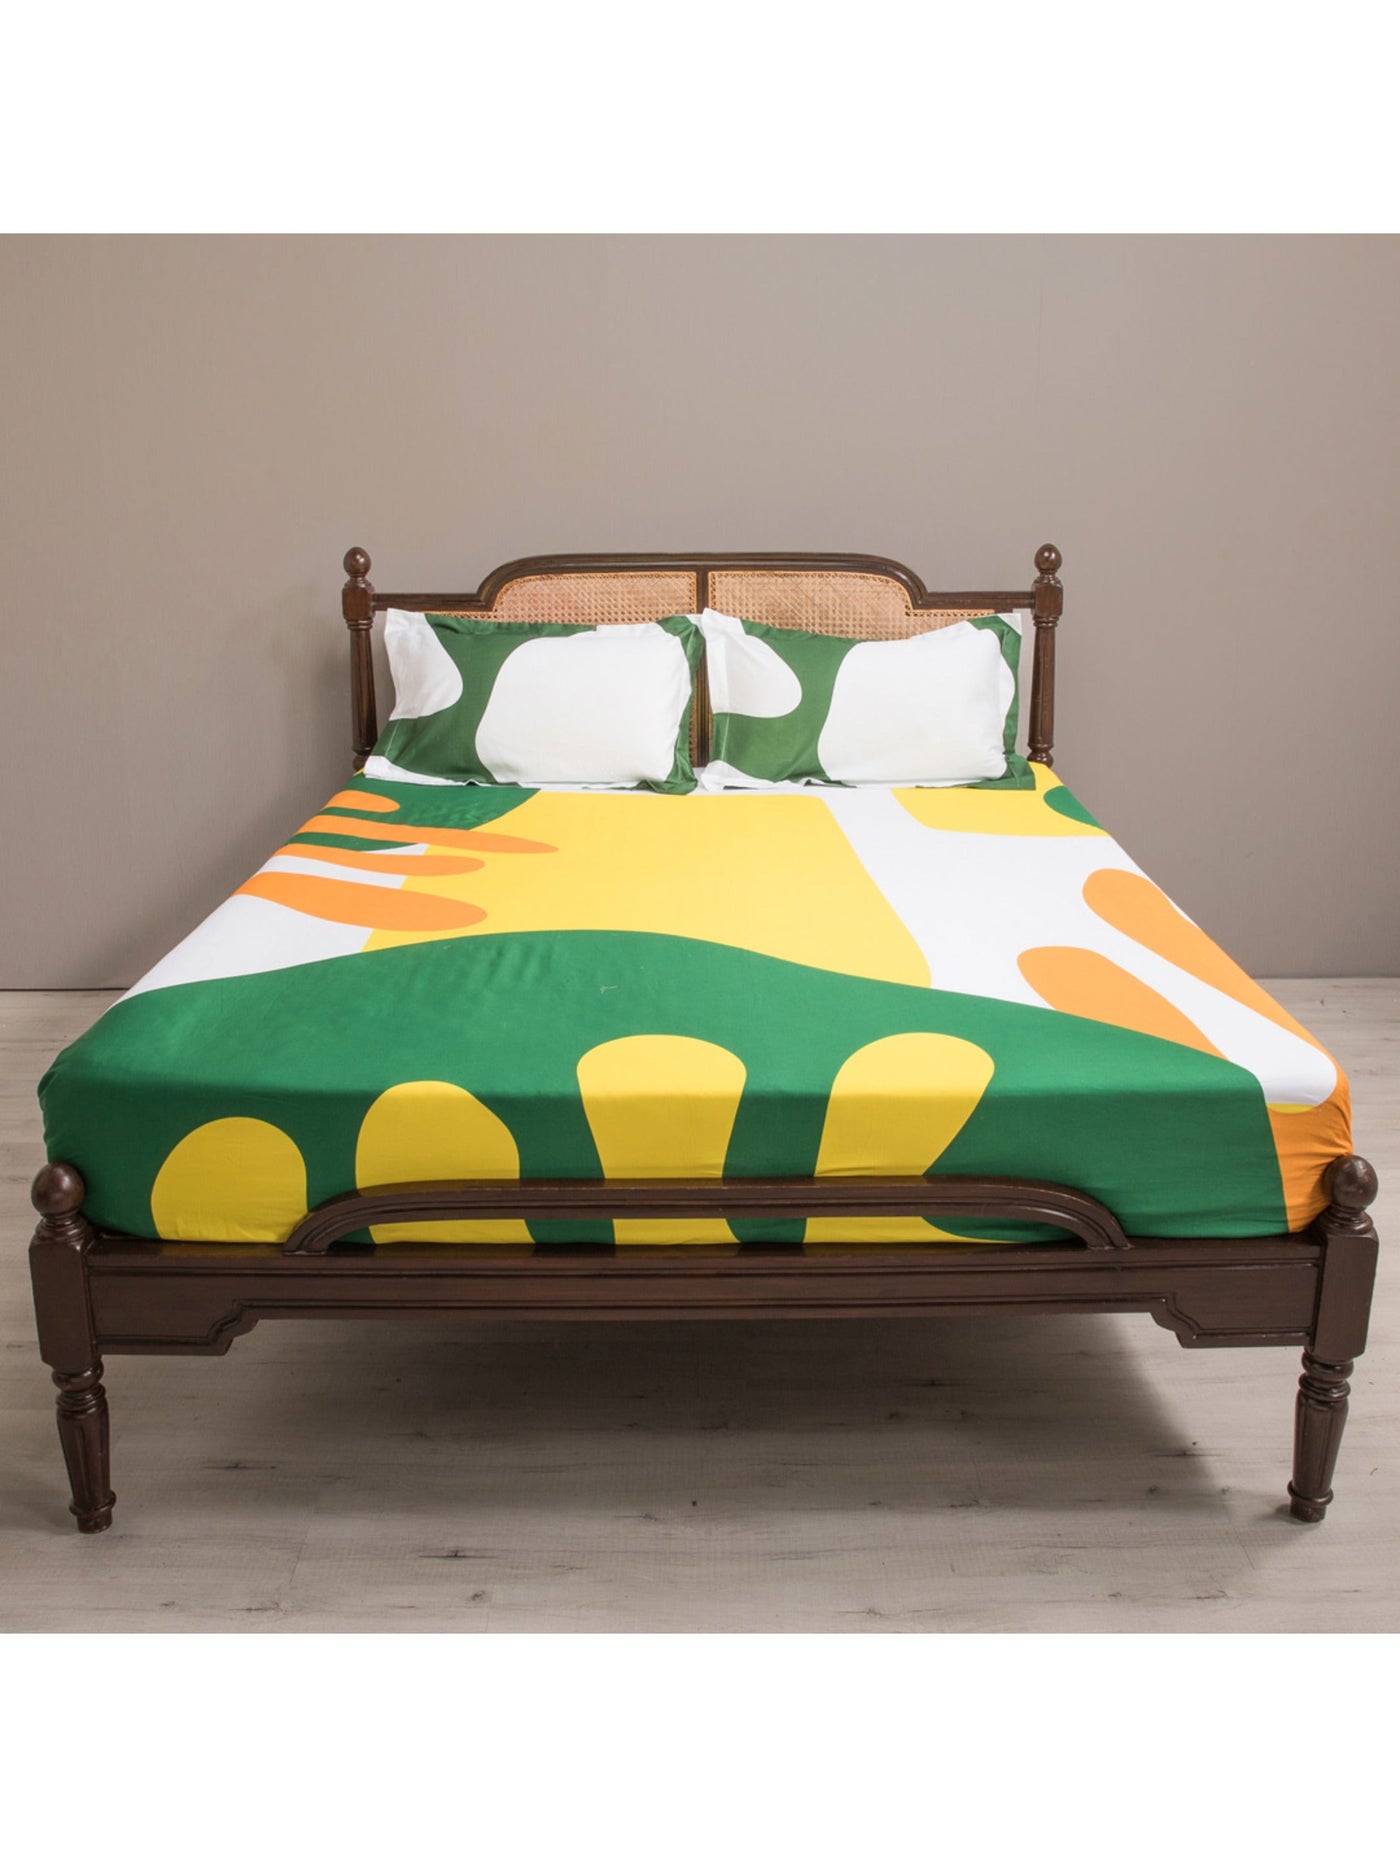 Bedsheet - The Matisse Meets Memphis